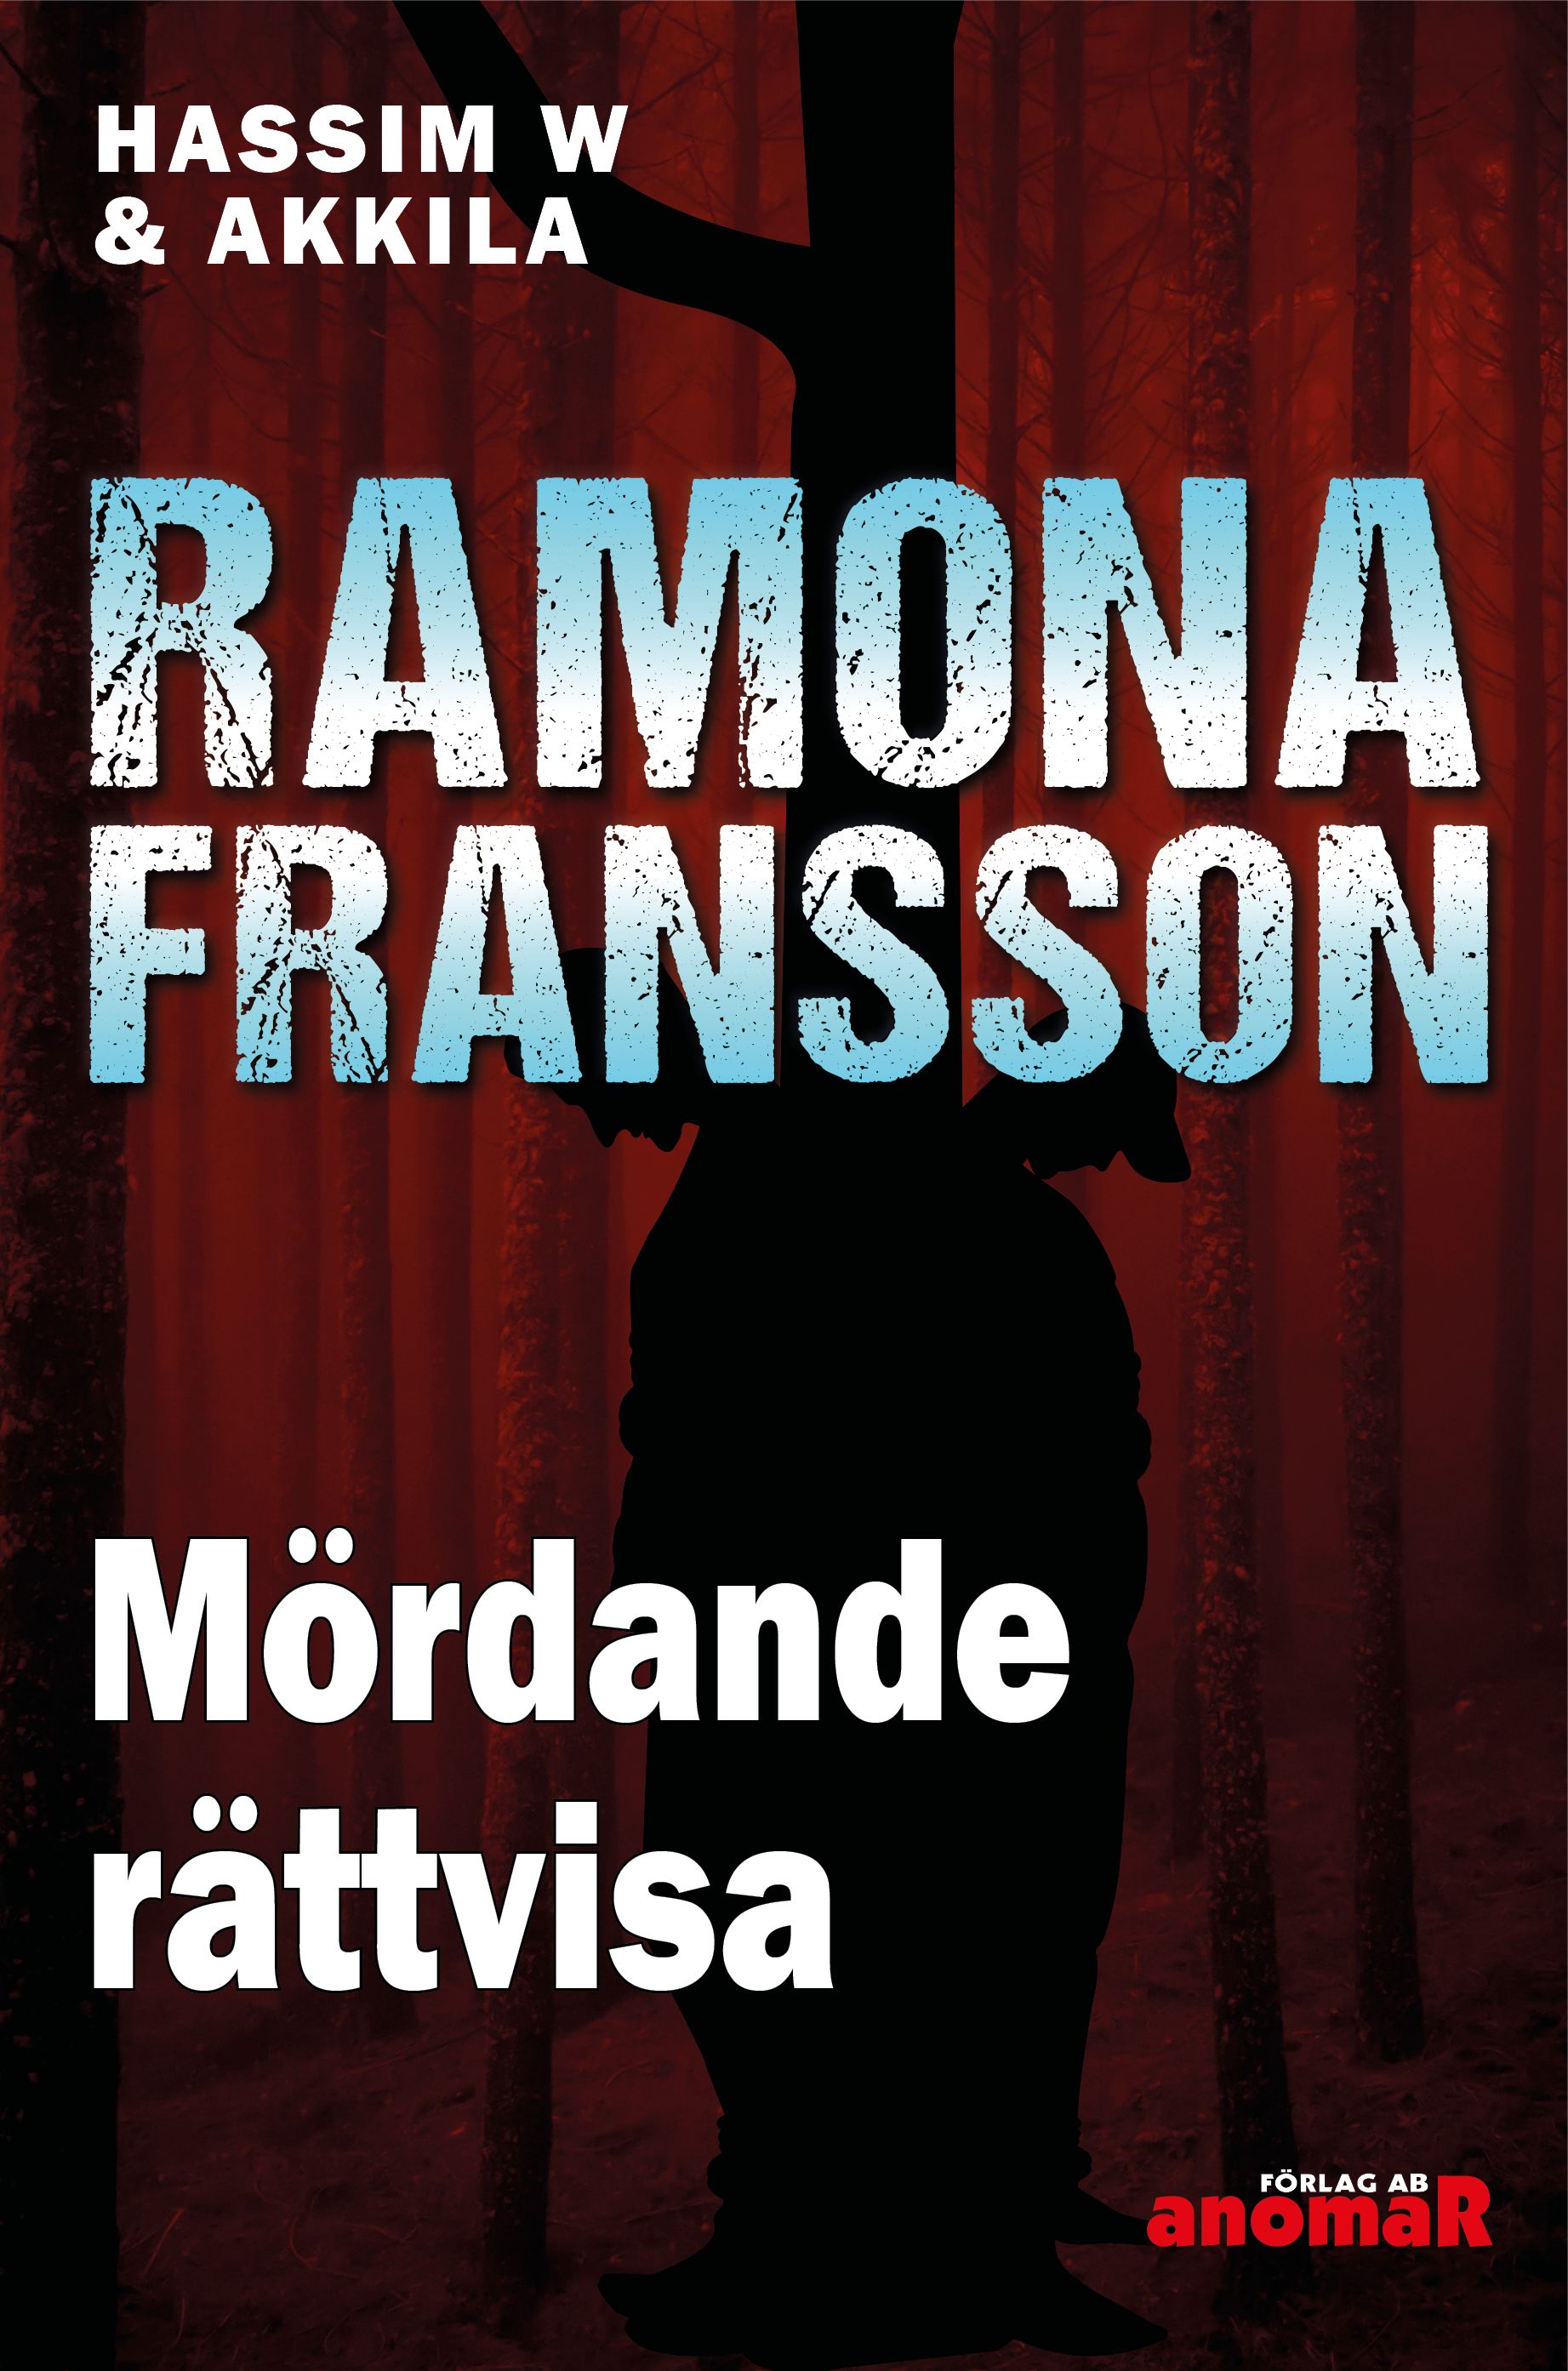 HW & Akkila, Mördande rättvisa, e-bog af Ramona Fransson